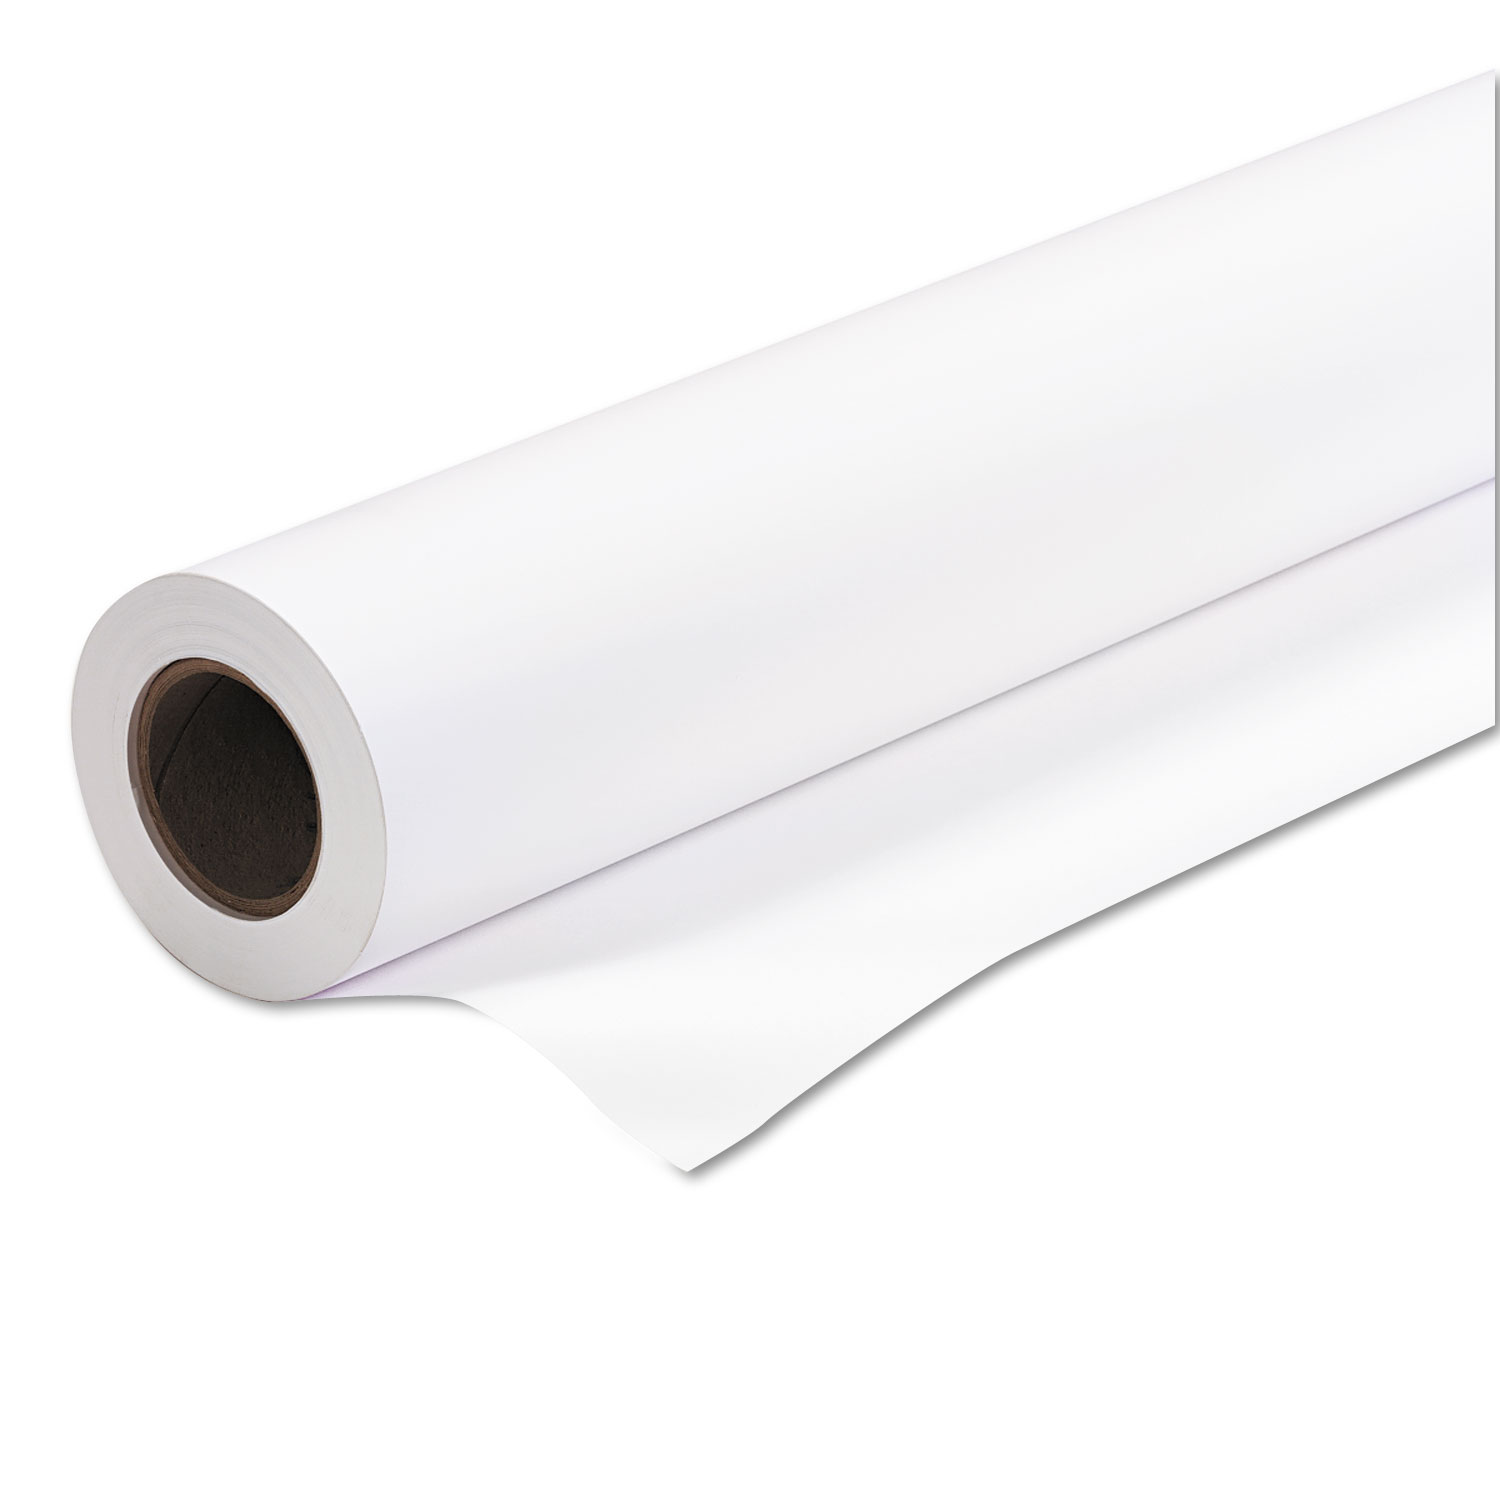  Iconex PMC44124 Amerigo Inkjet Bond Paper Roll, 2 Core, 20 lb, 24 x 150 ft, Uncoated White (ICX90750206) 